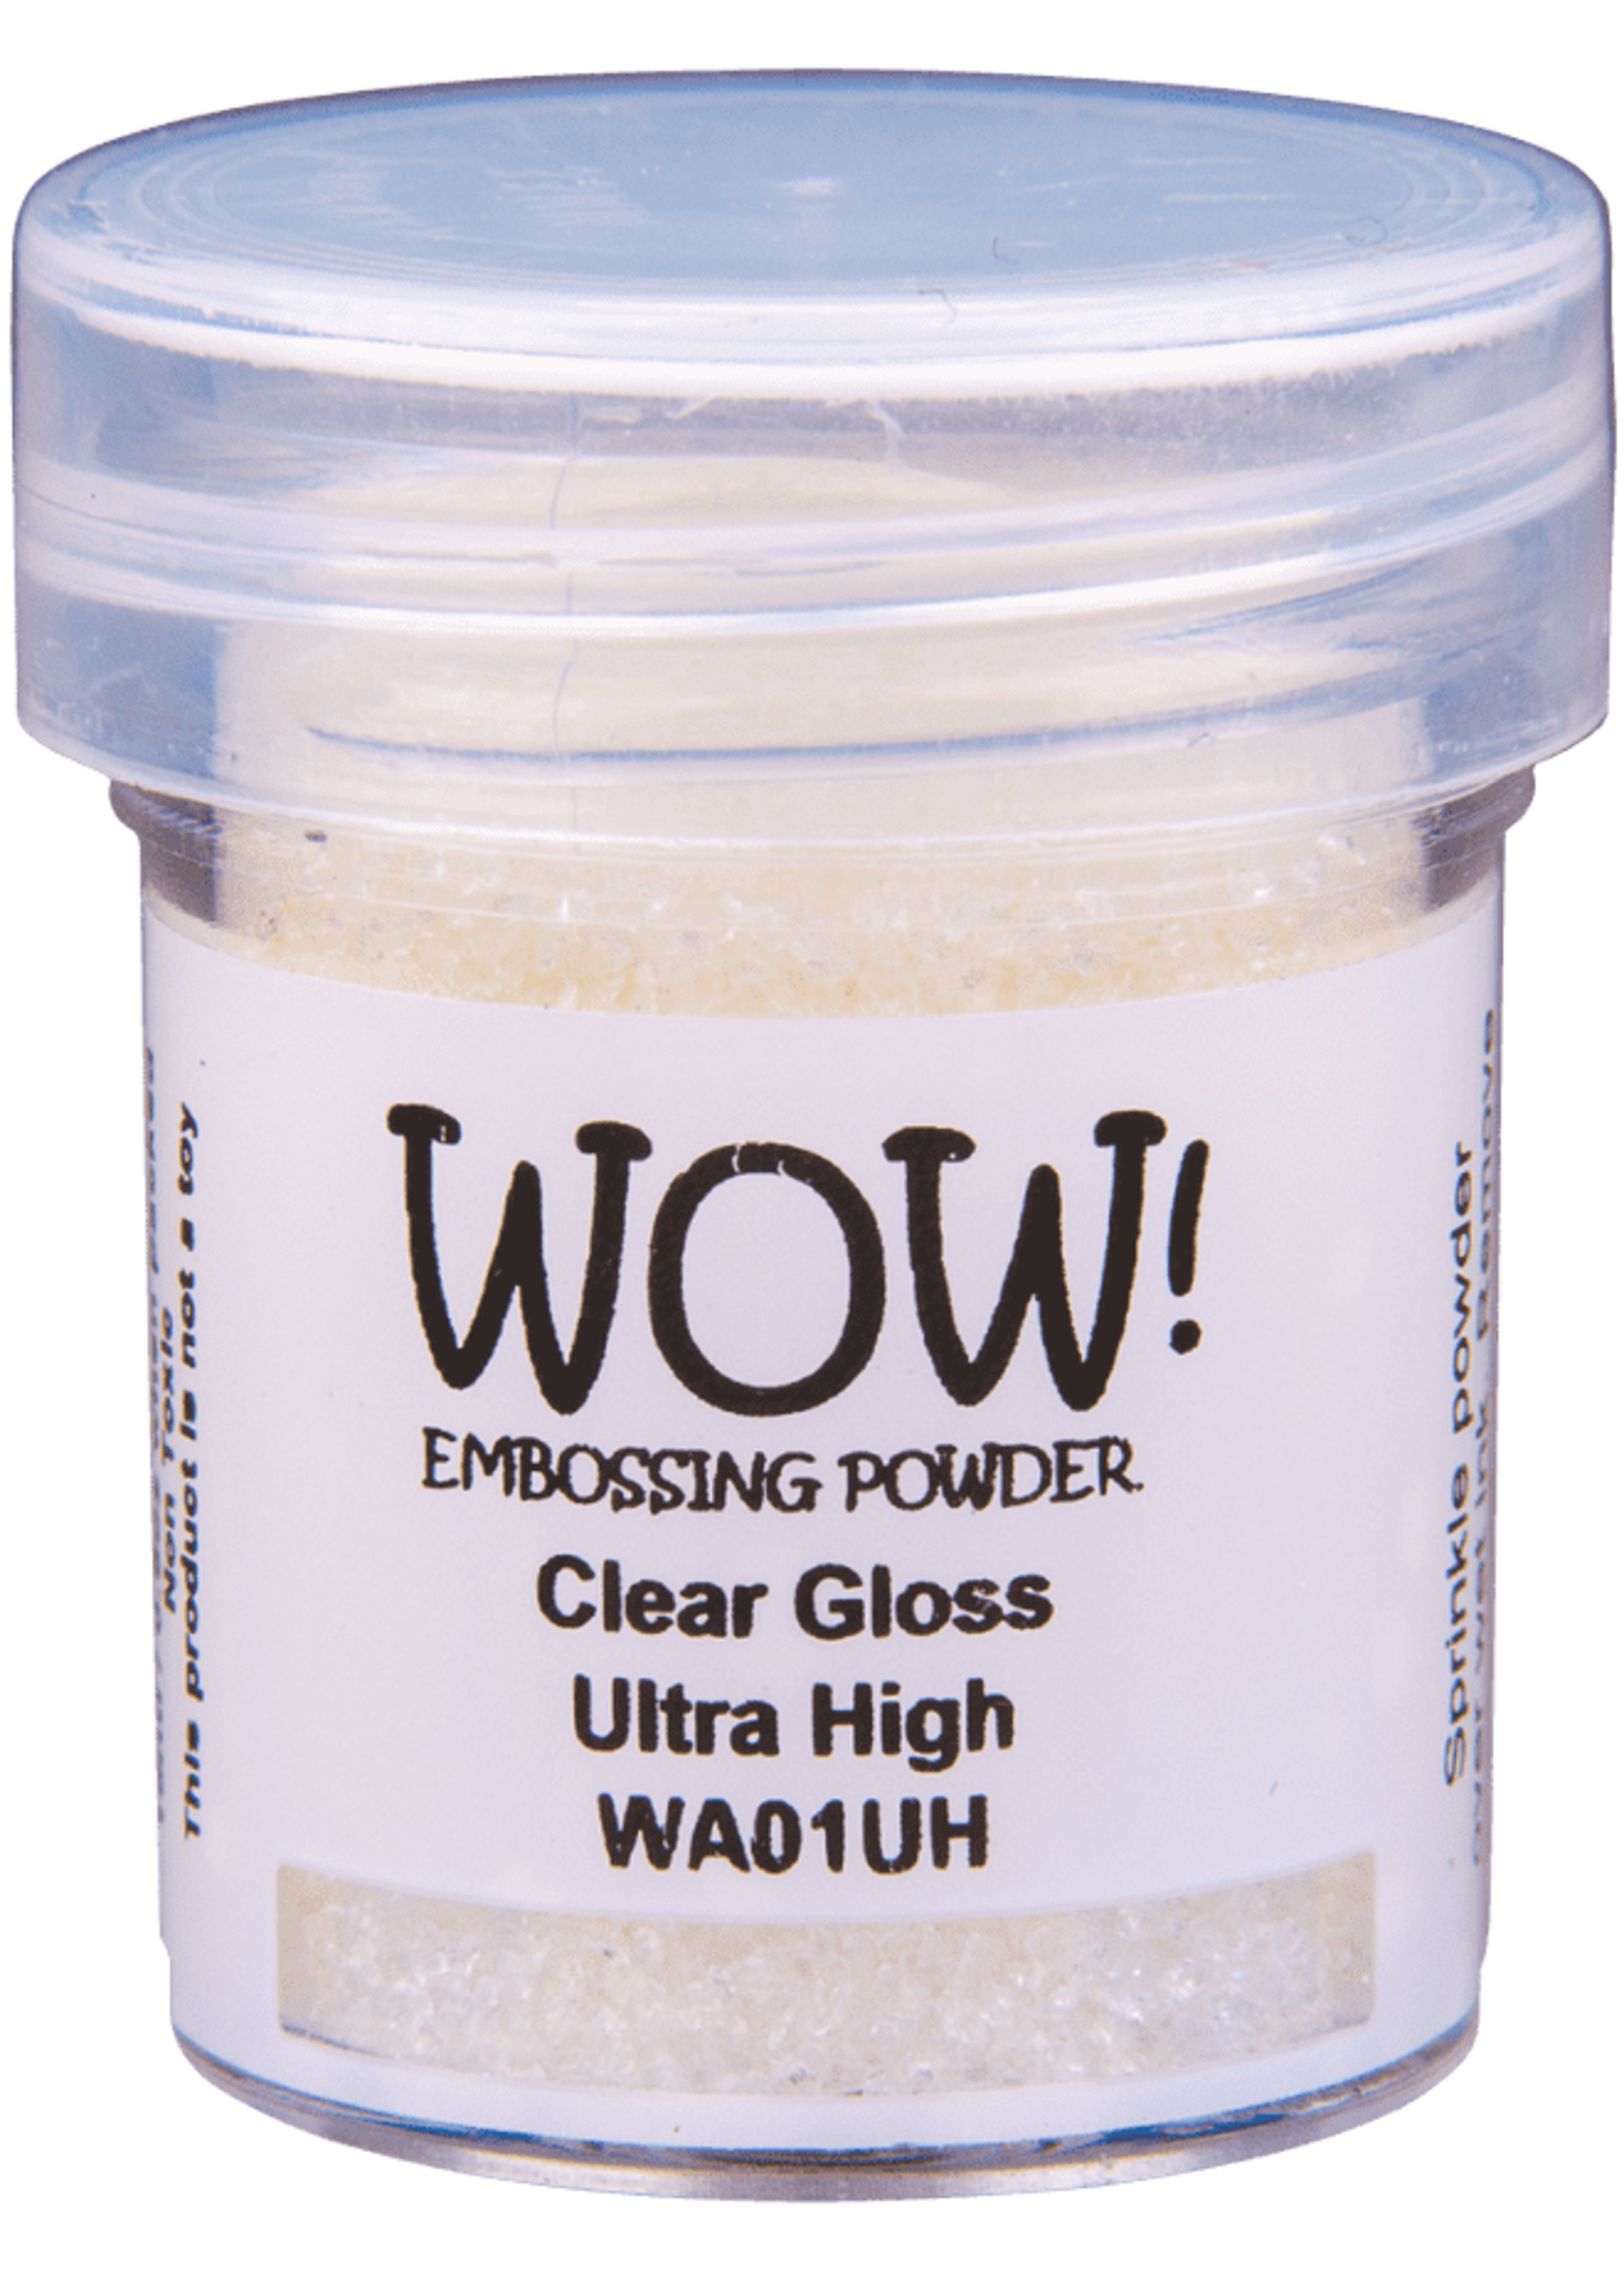 wow! Wow!Ultra High: Clear Gloss